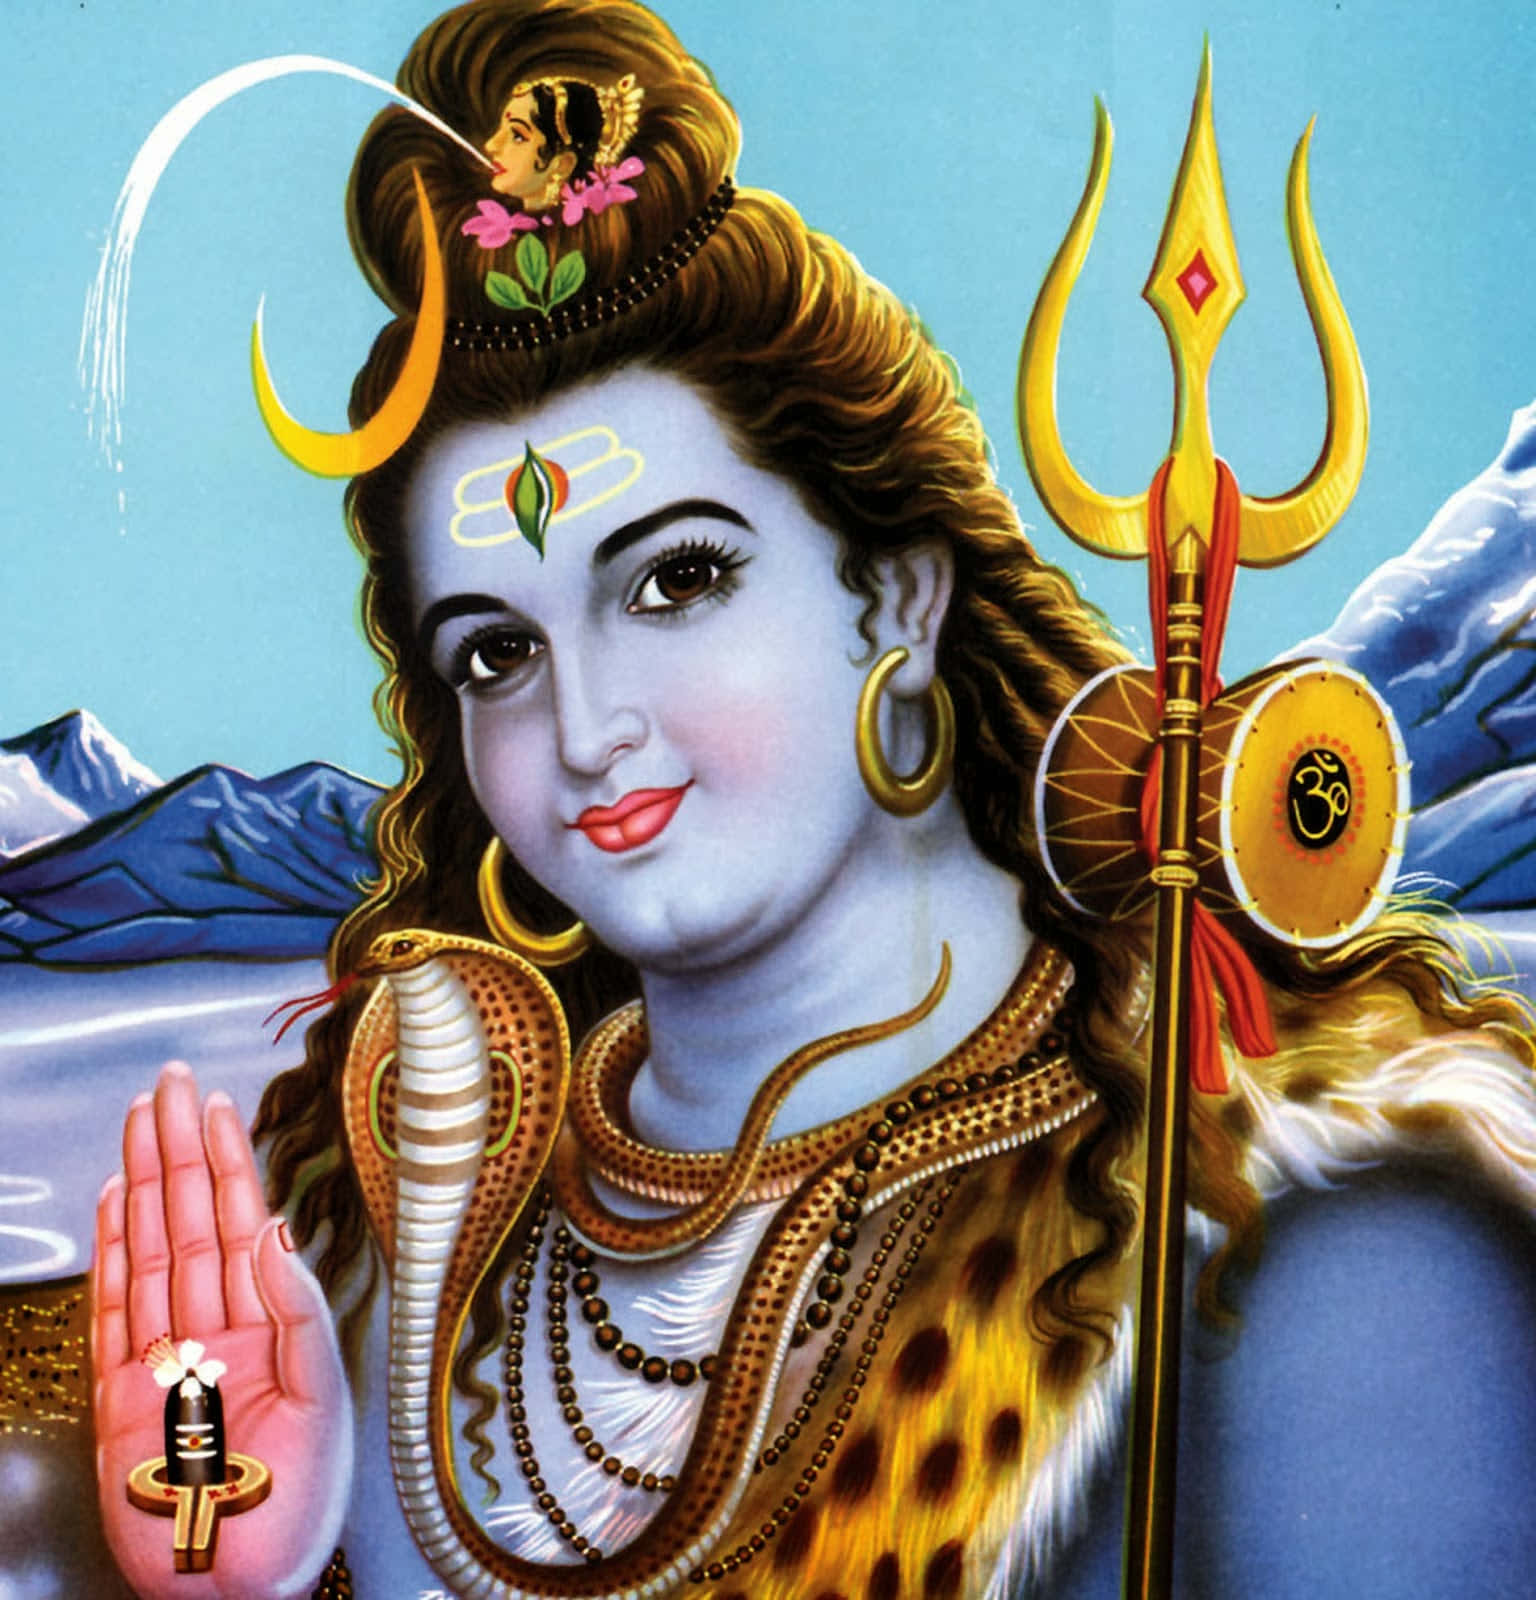 Odivino Senhor Shiva